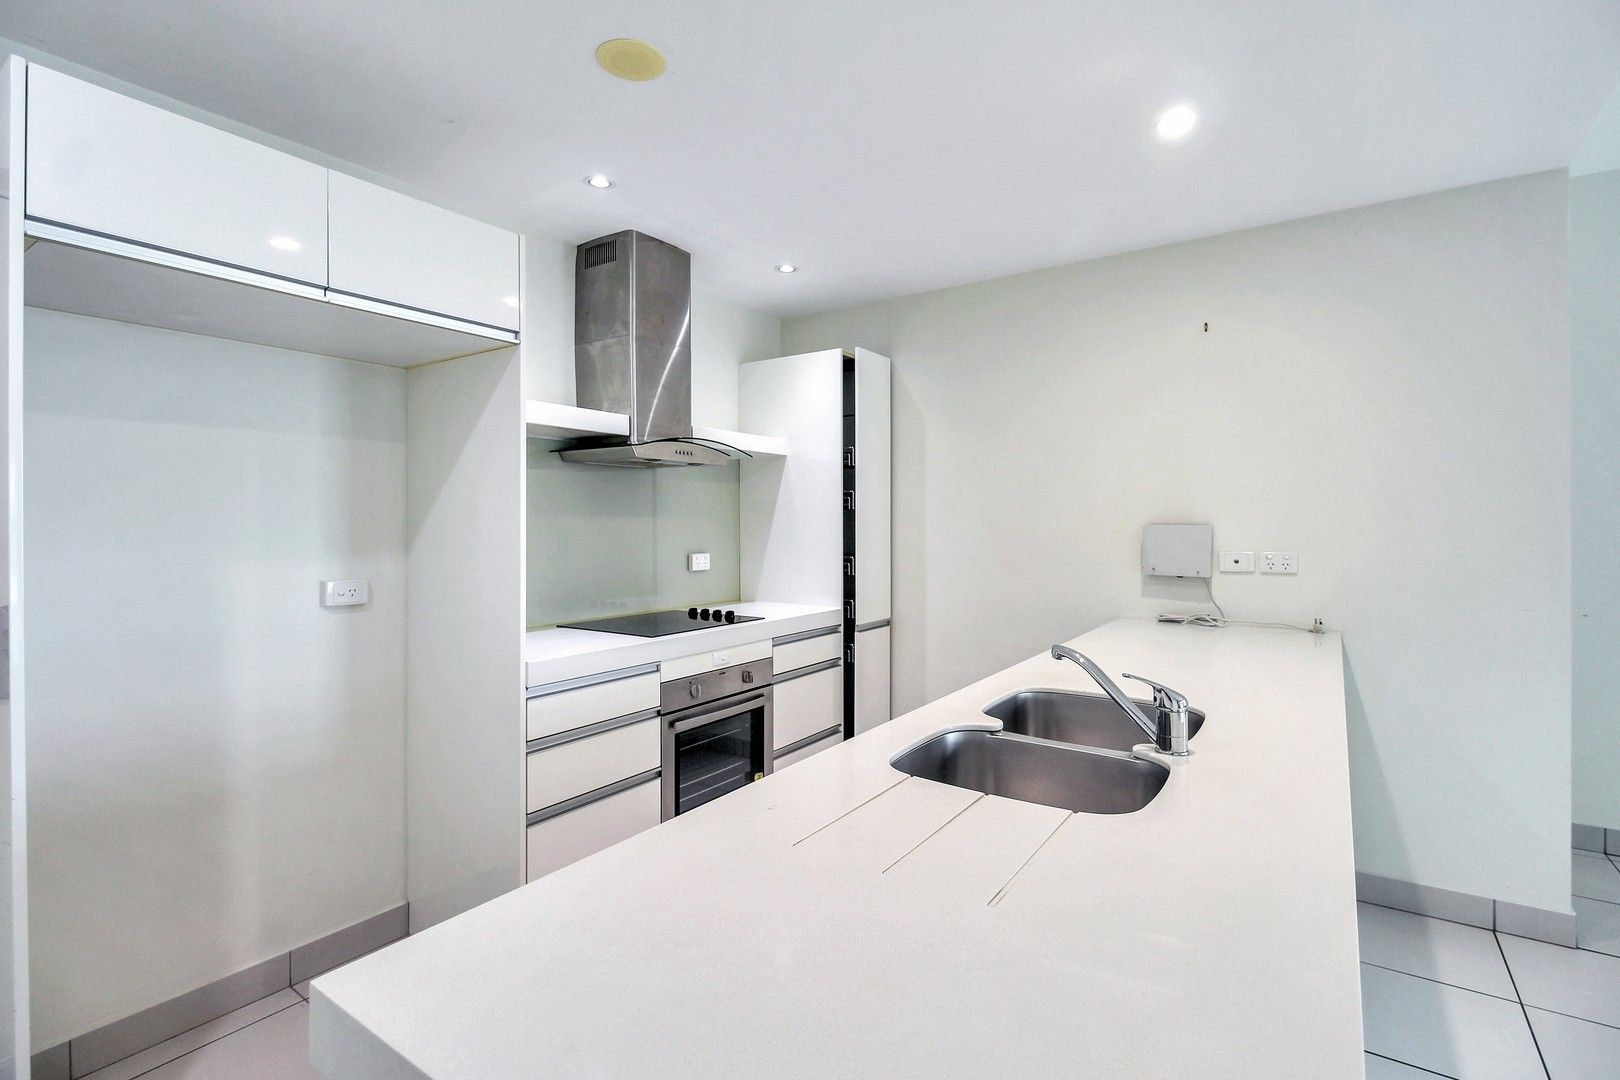 2 bedrooms Apartment / Unit / Flat in 804/24 Litchfield Street DARWIN CITY NT, 0800